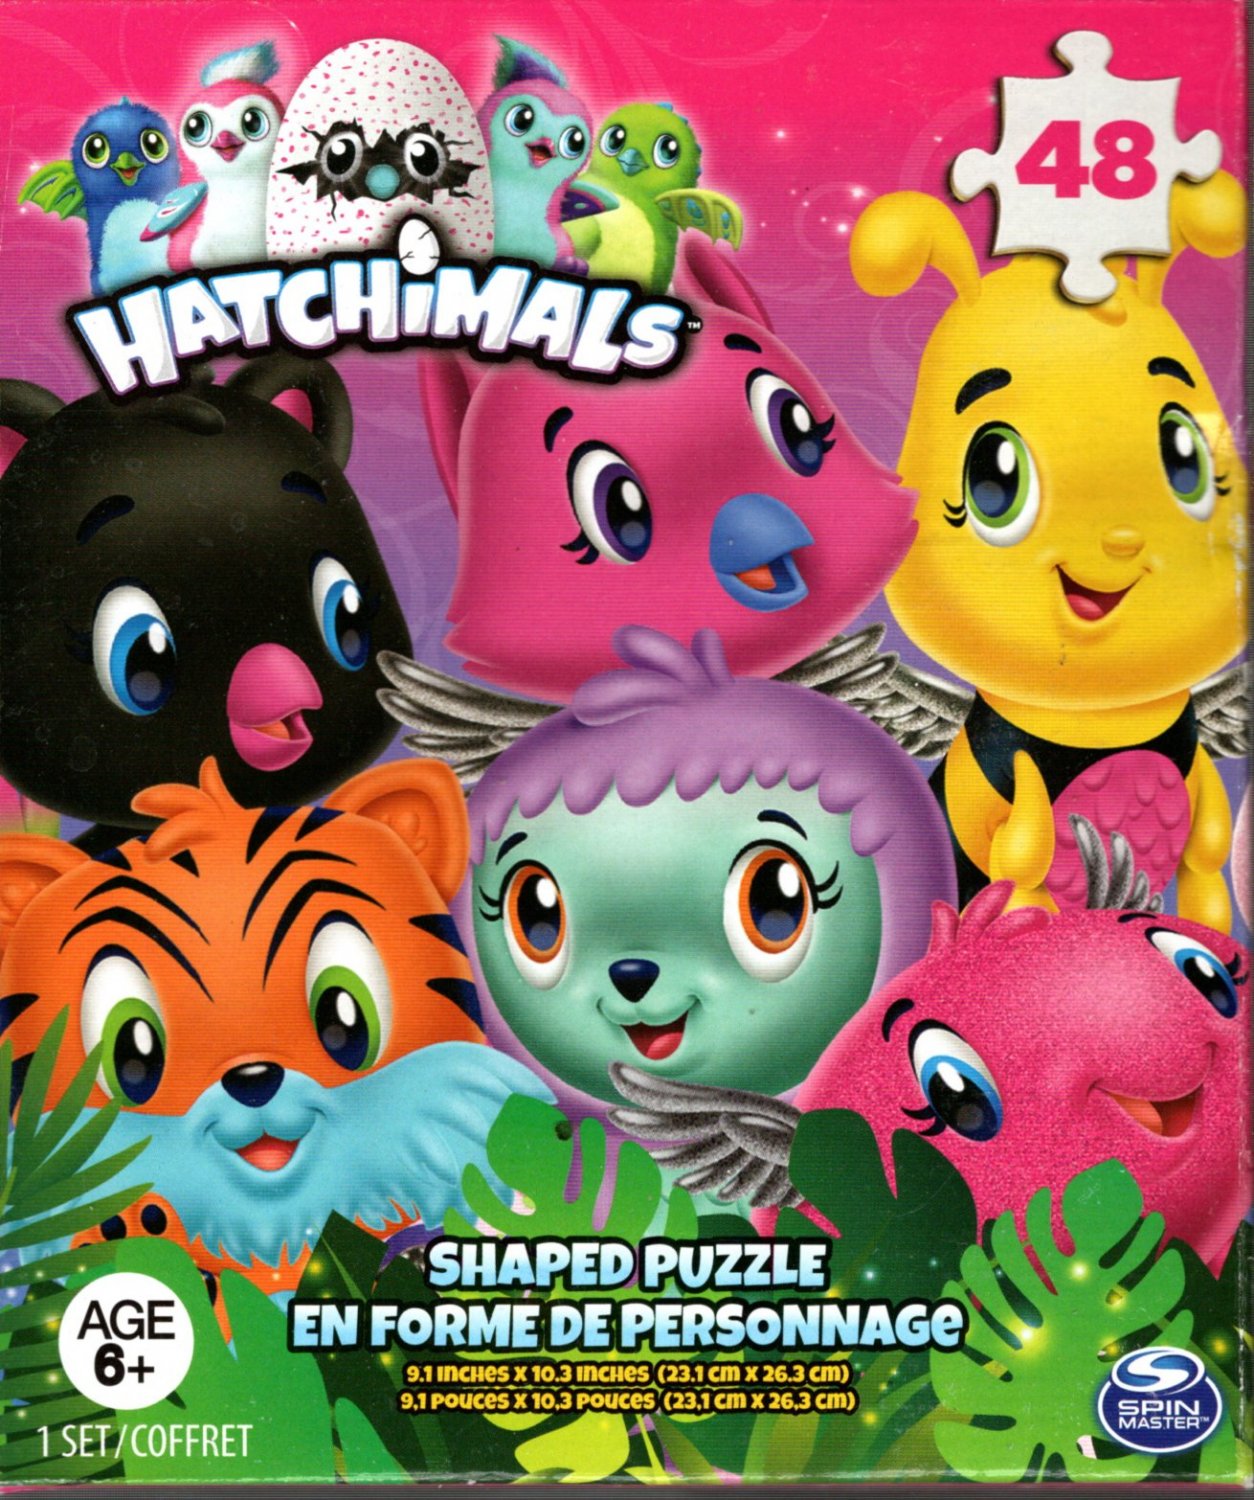 Hatchimals - 48 Shaped Puzzle v2